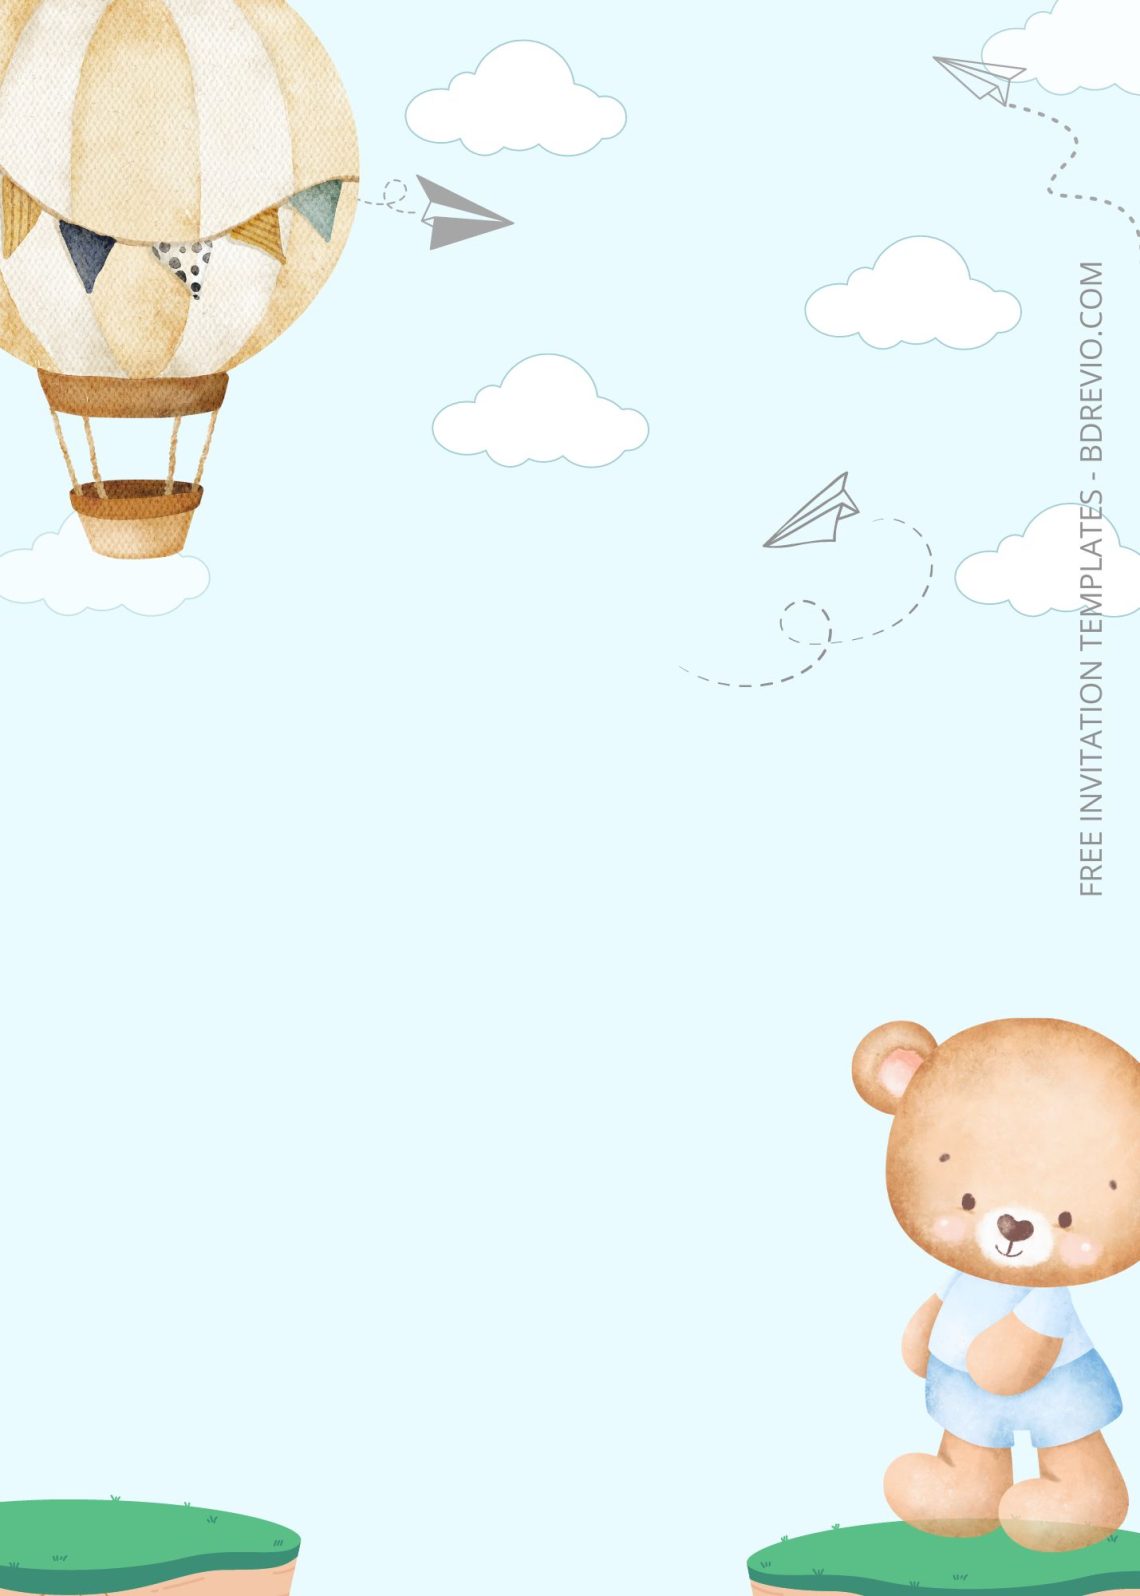 FREE Adorable Teddy Bear Baby Shower Invitation Templates